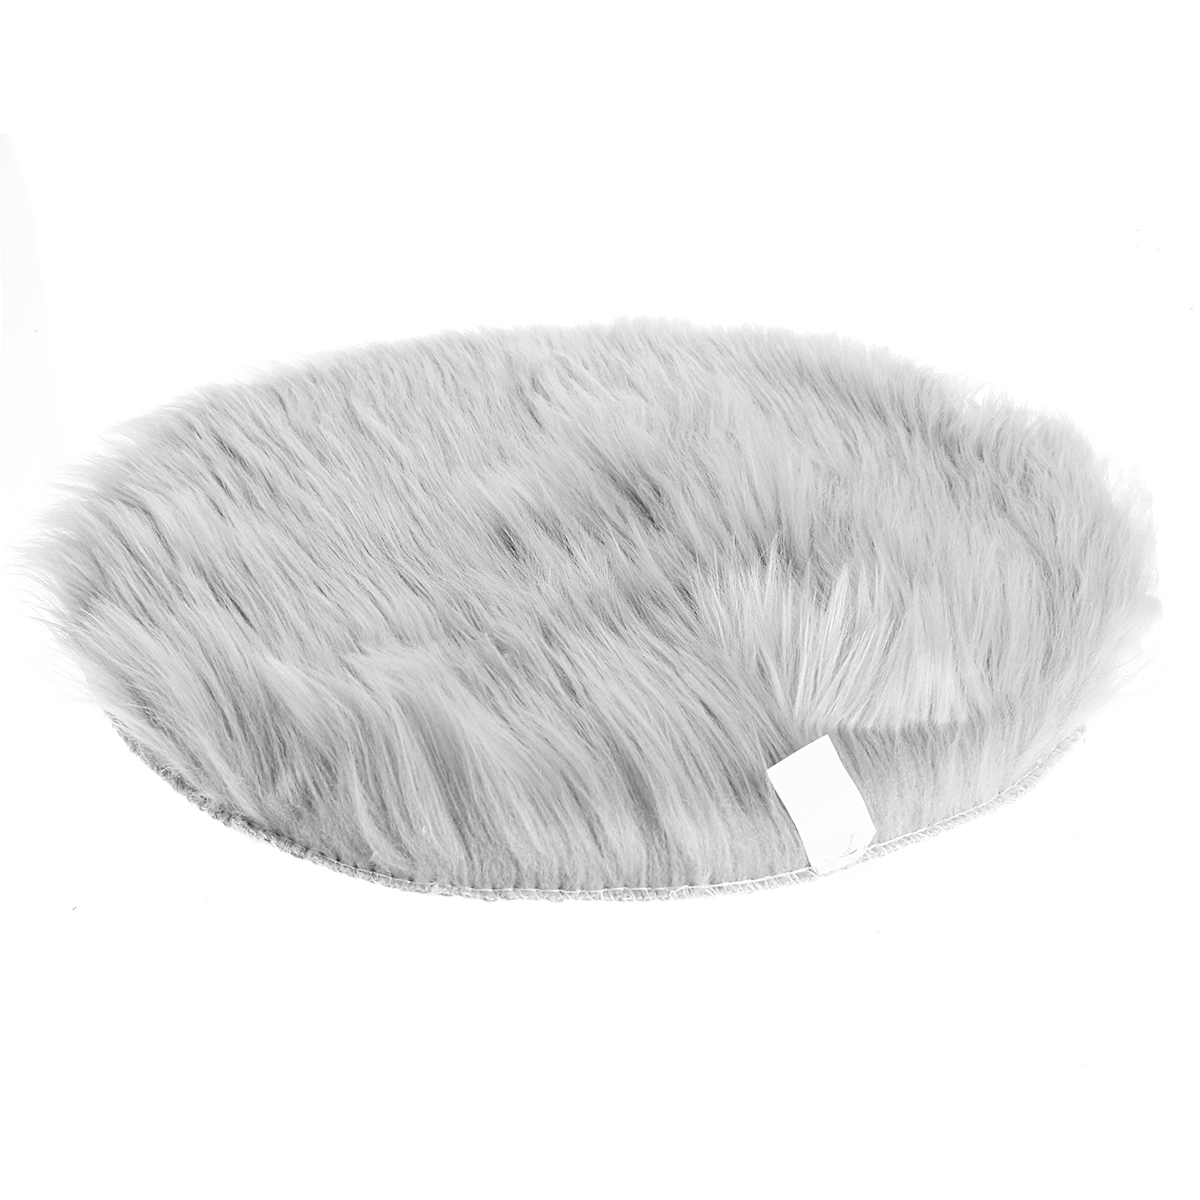 40cm-Fluffy-Rug-Round-Pad-Carpet-Hairy-Fur-Shag-Sheepskin-Bedroom-Floor-Mat-1621268-8